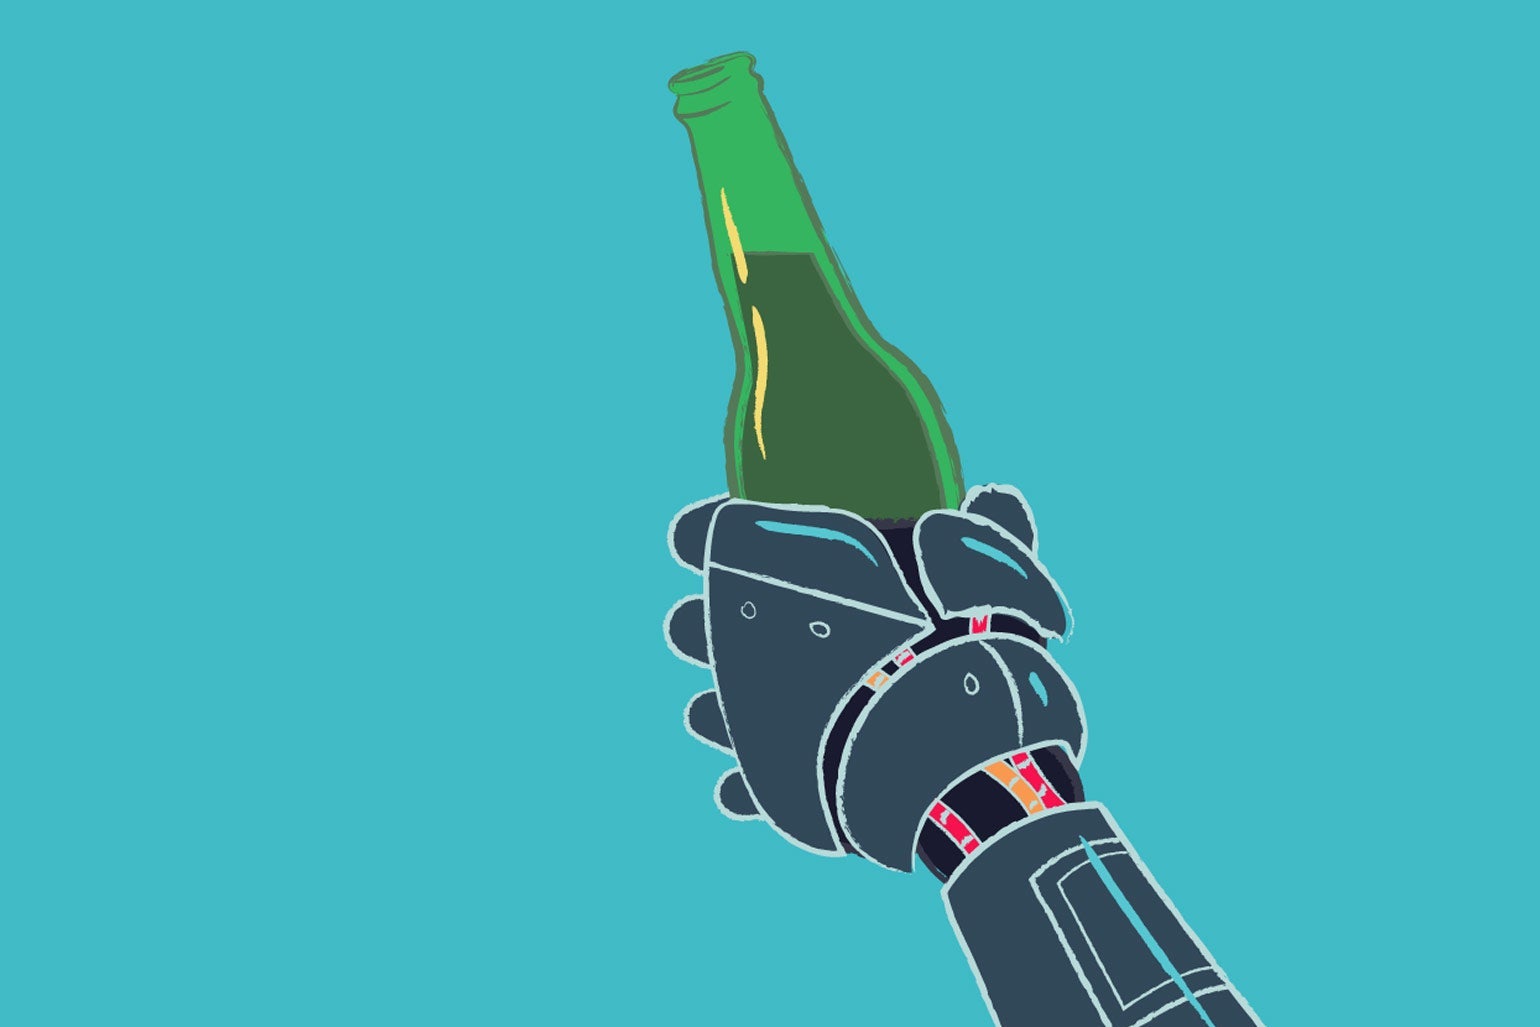 A robot hand holding a bottled beer